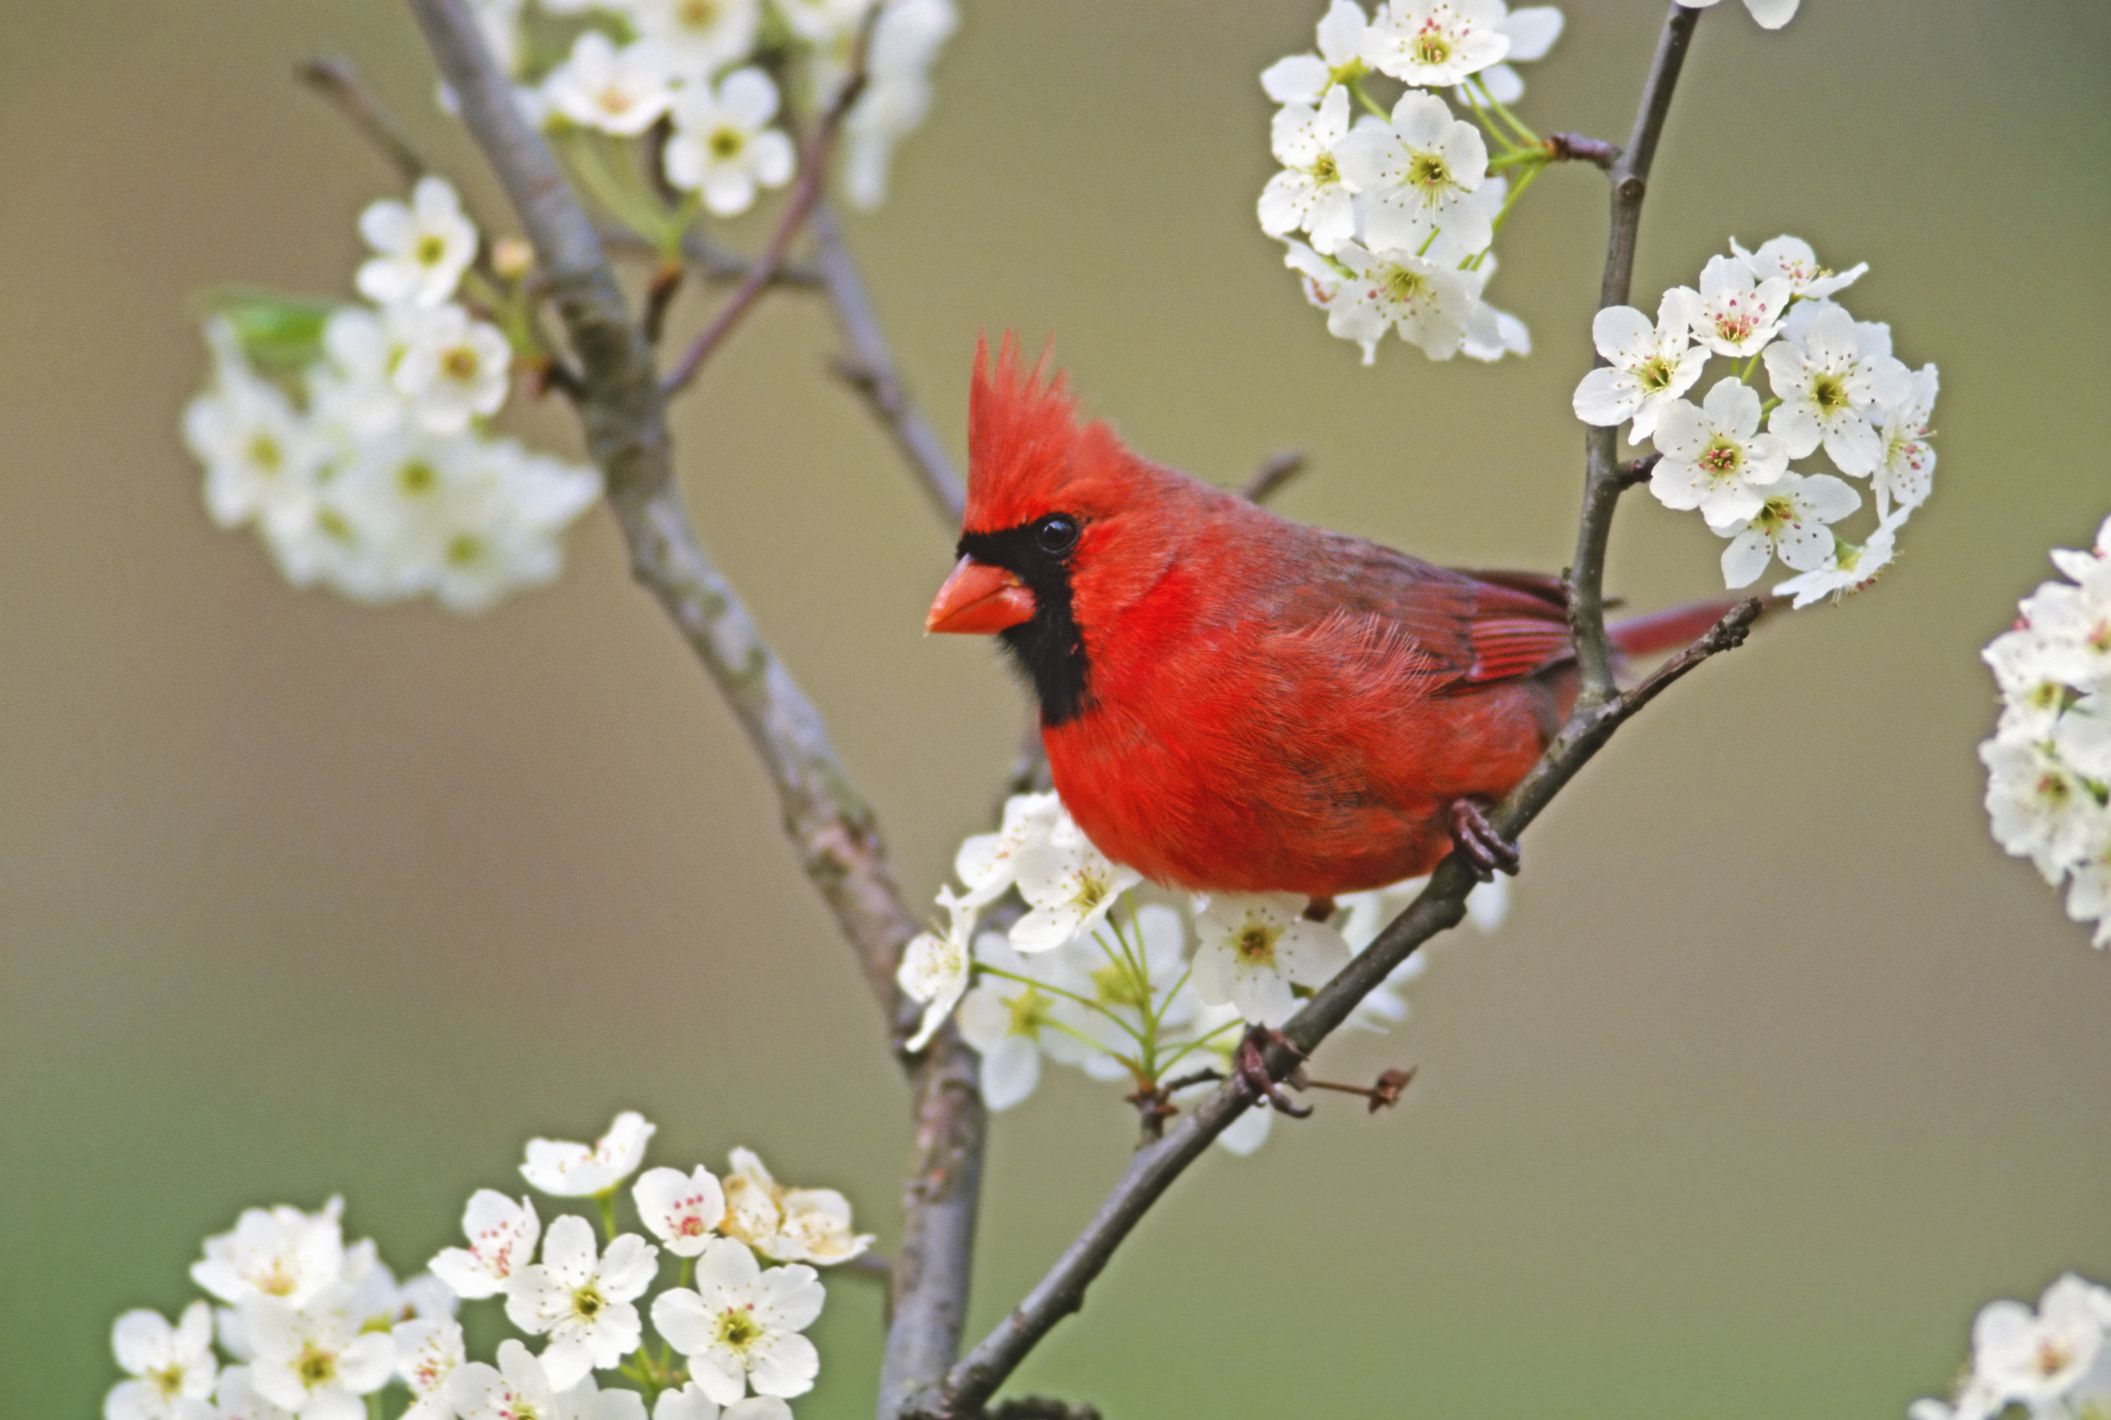 northern cardinal, cardinal, white flower, animal, bird, blossom, branch, flower, birds